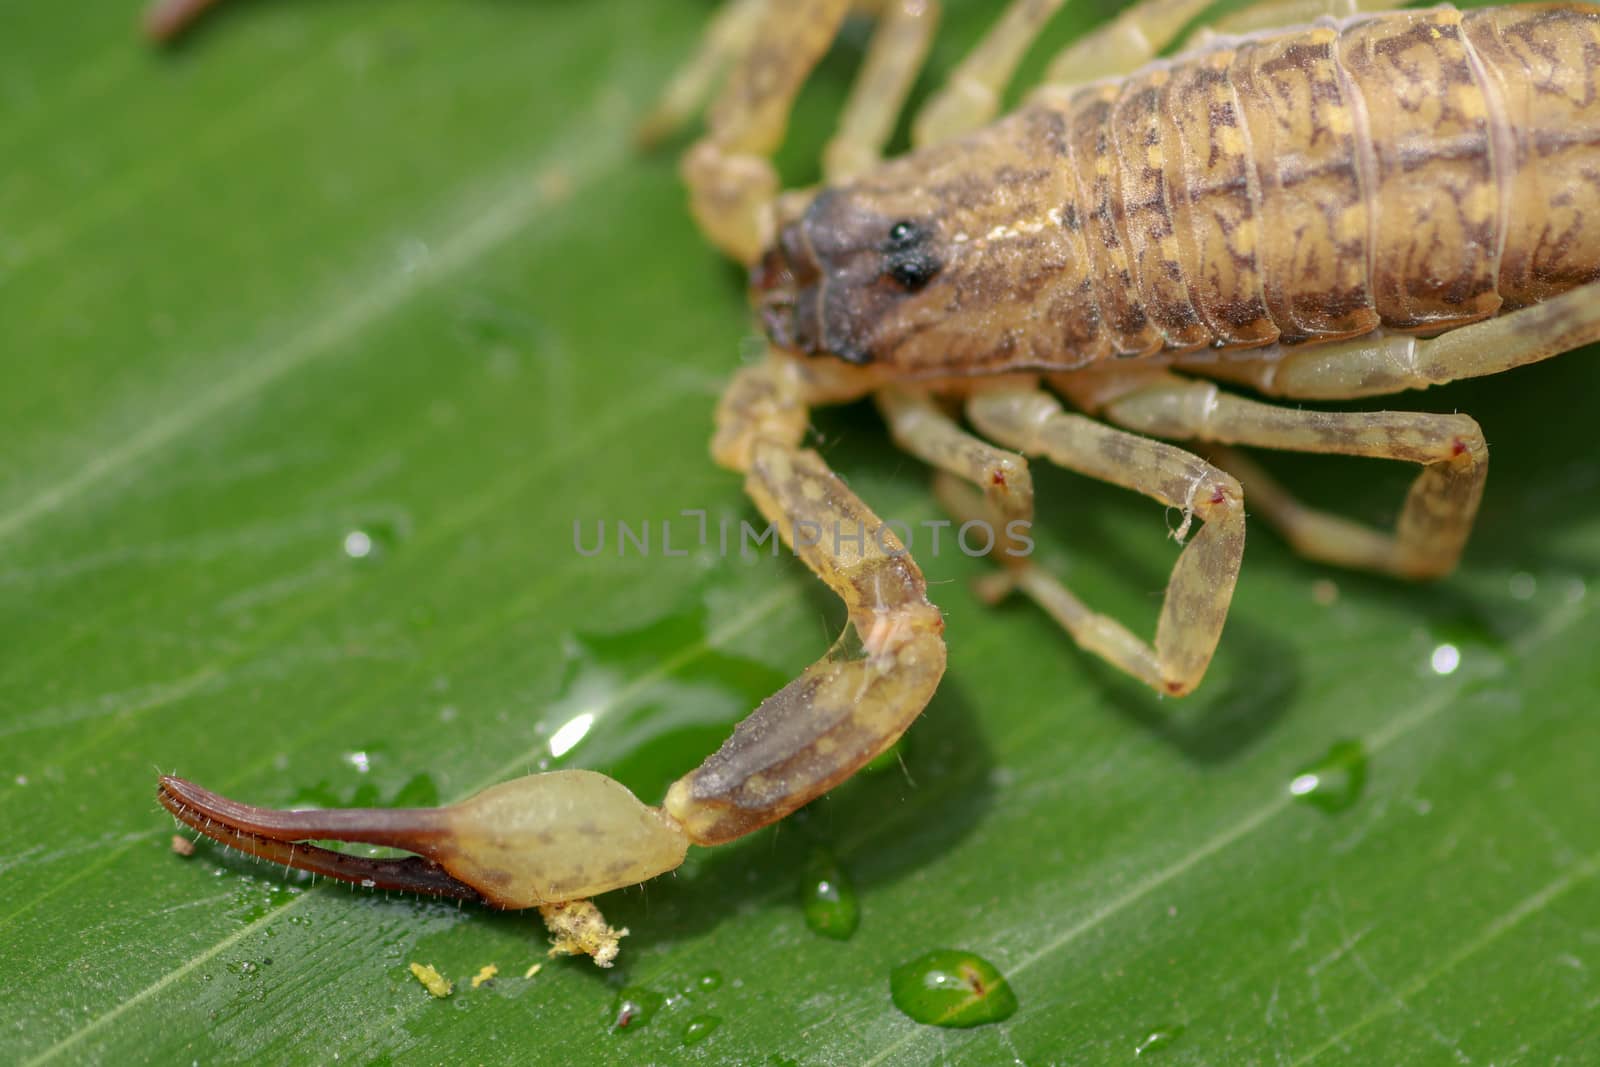 A scorpion pincer pedipalp up close. Swimming Scorpion, Chinese swimming scorpion or Ornate Bark Scorpion on a leaf in a tropical jungle.